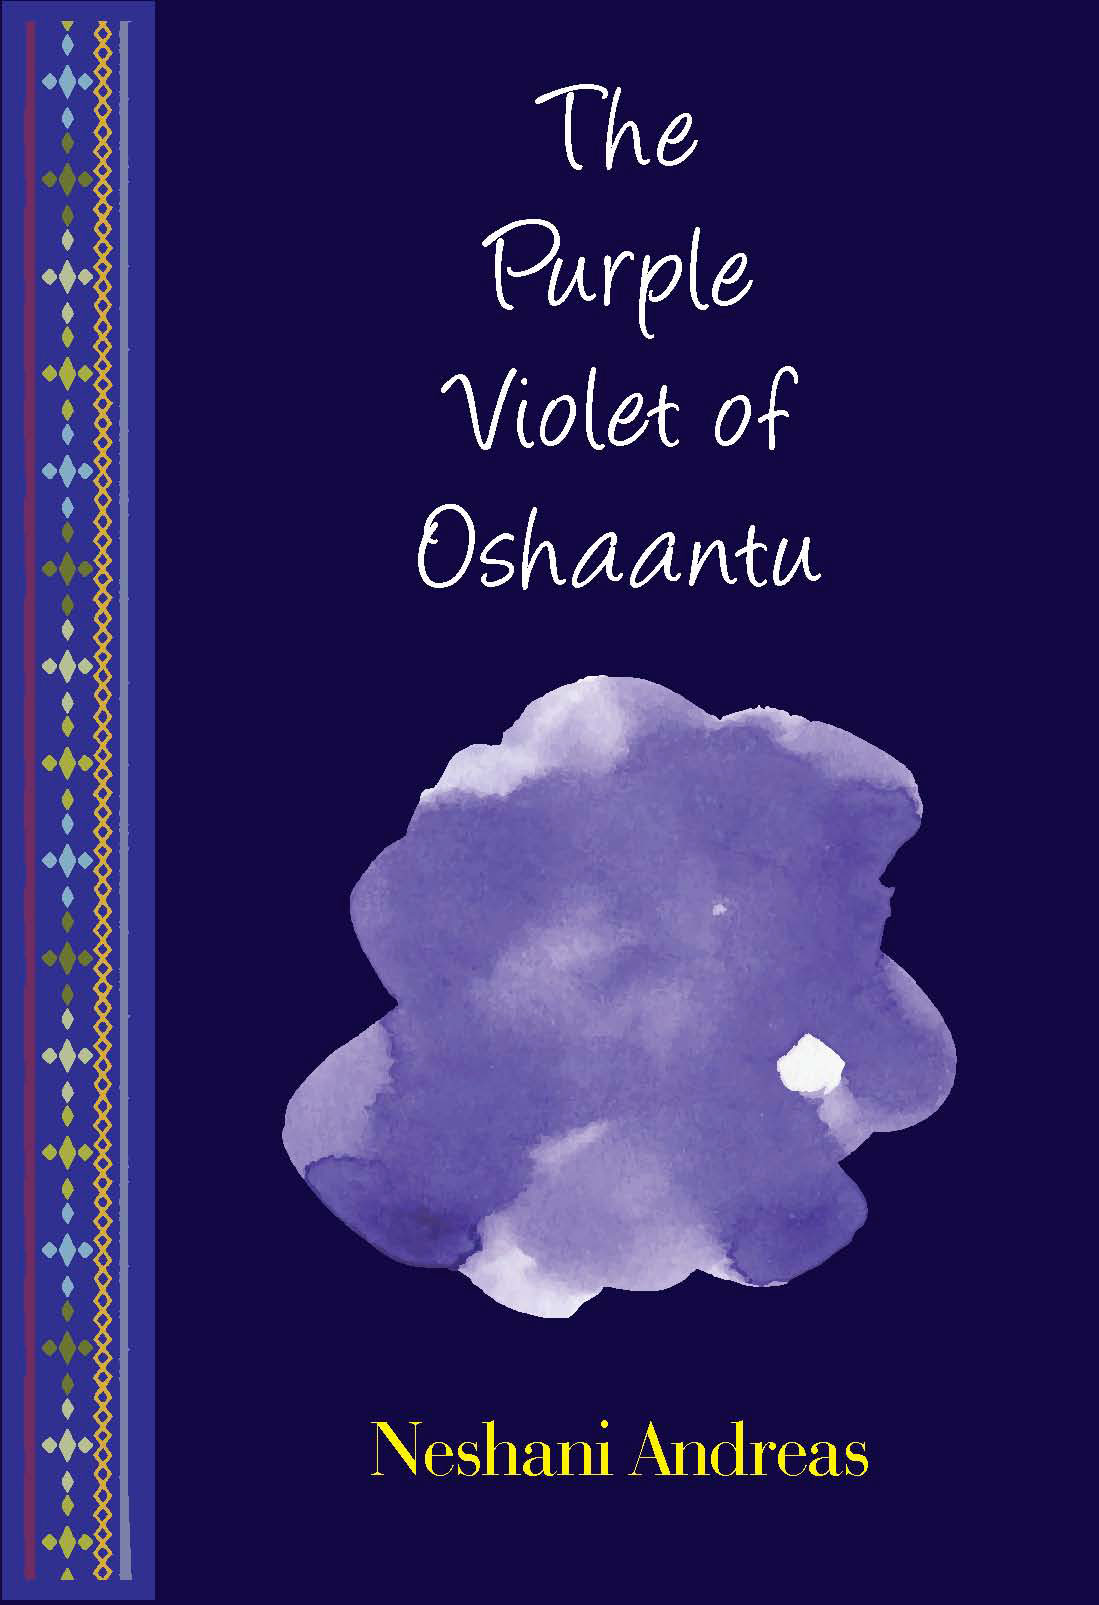 The Purple Violet of Oshaantu:  by Neshani  Andreas